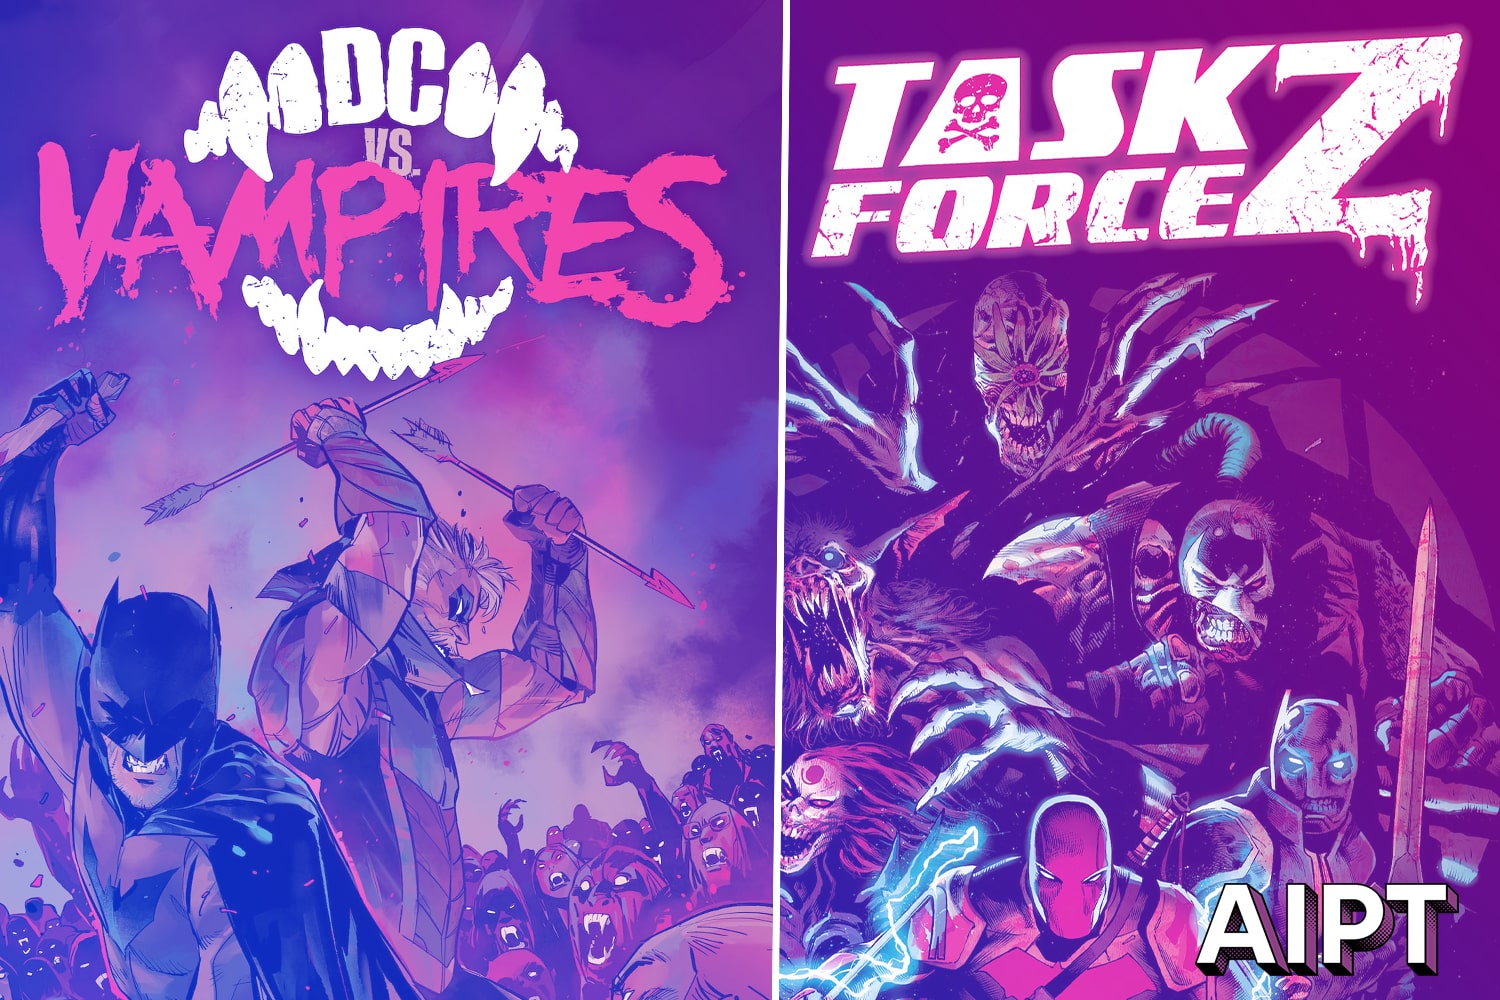 DC Comics announces 'DC vs. Vampires' & 'Task Force Z' for October 2021